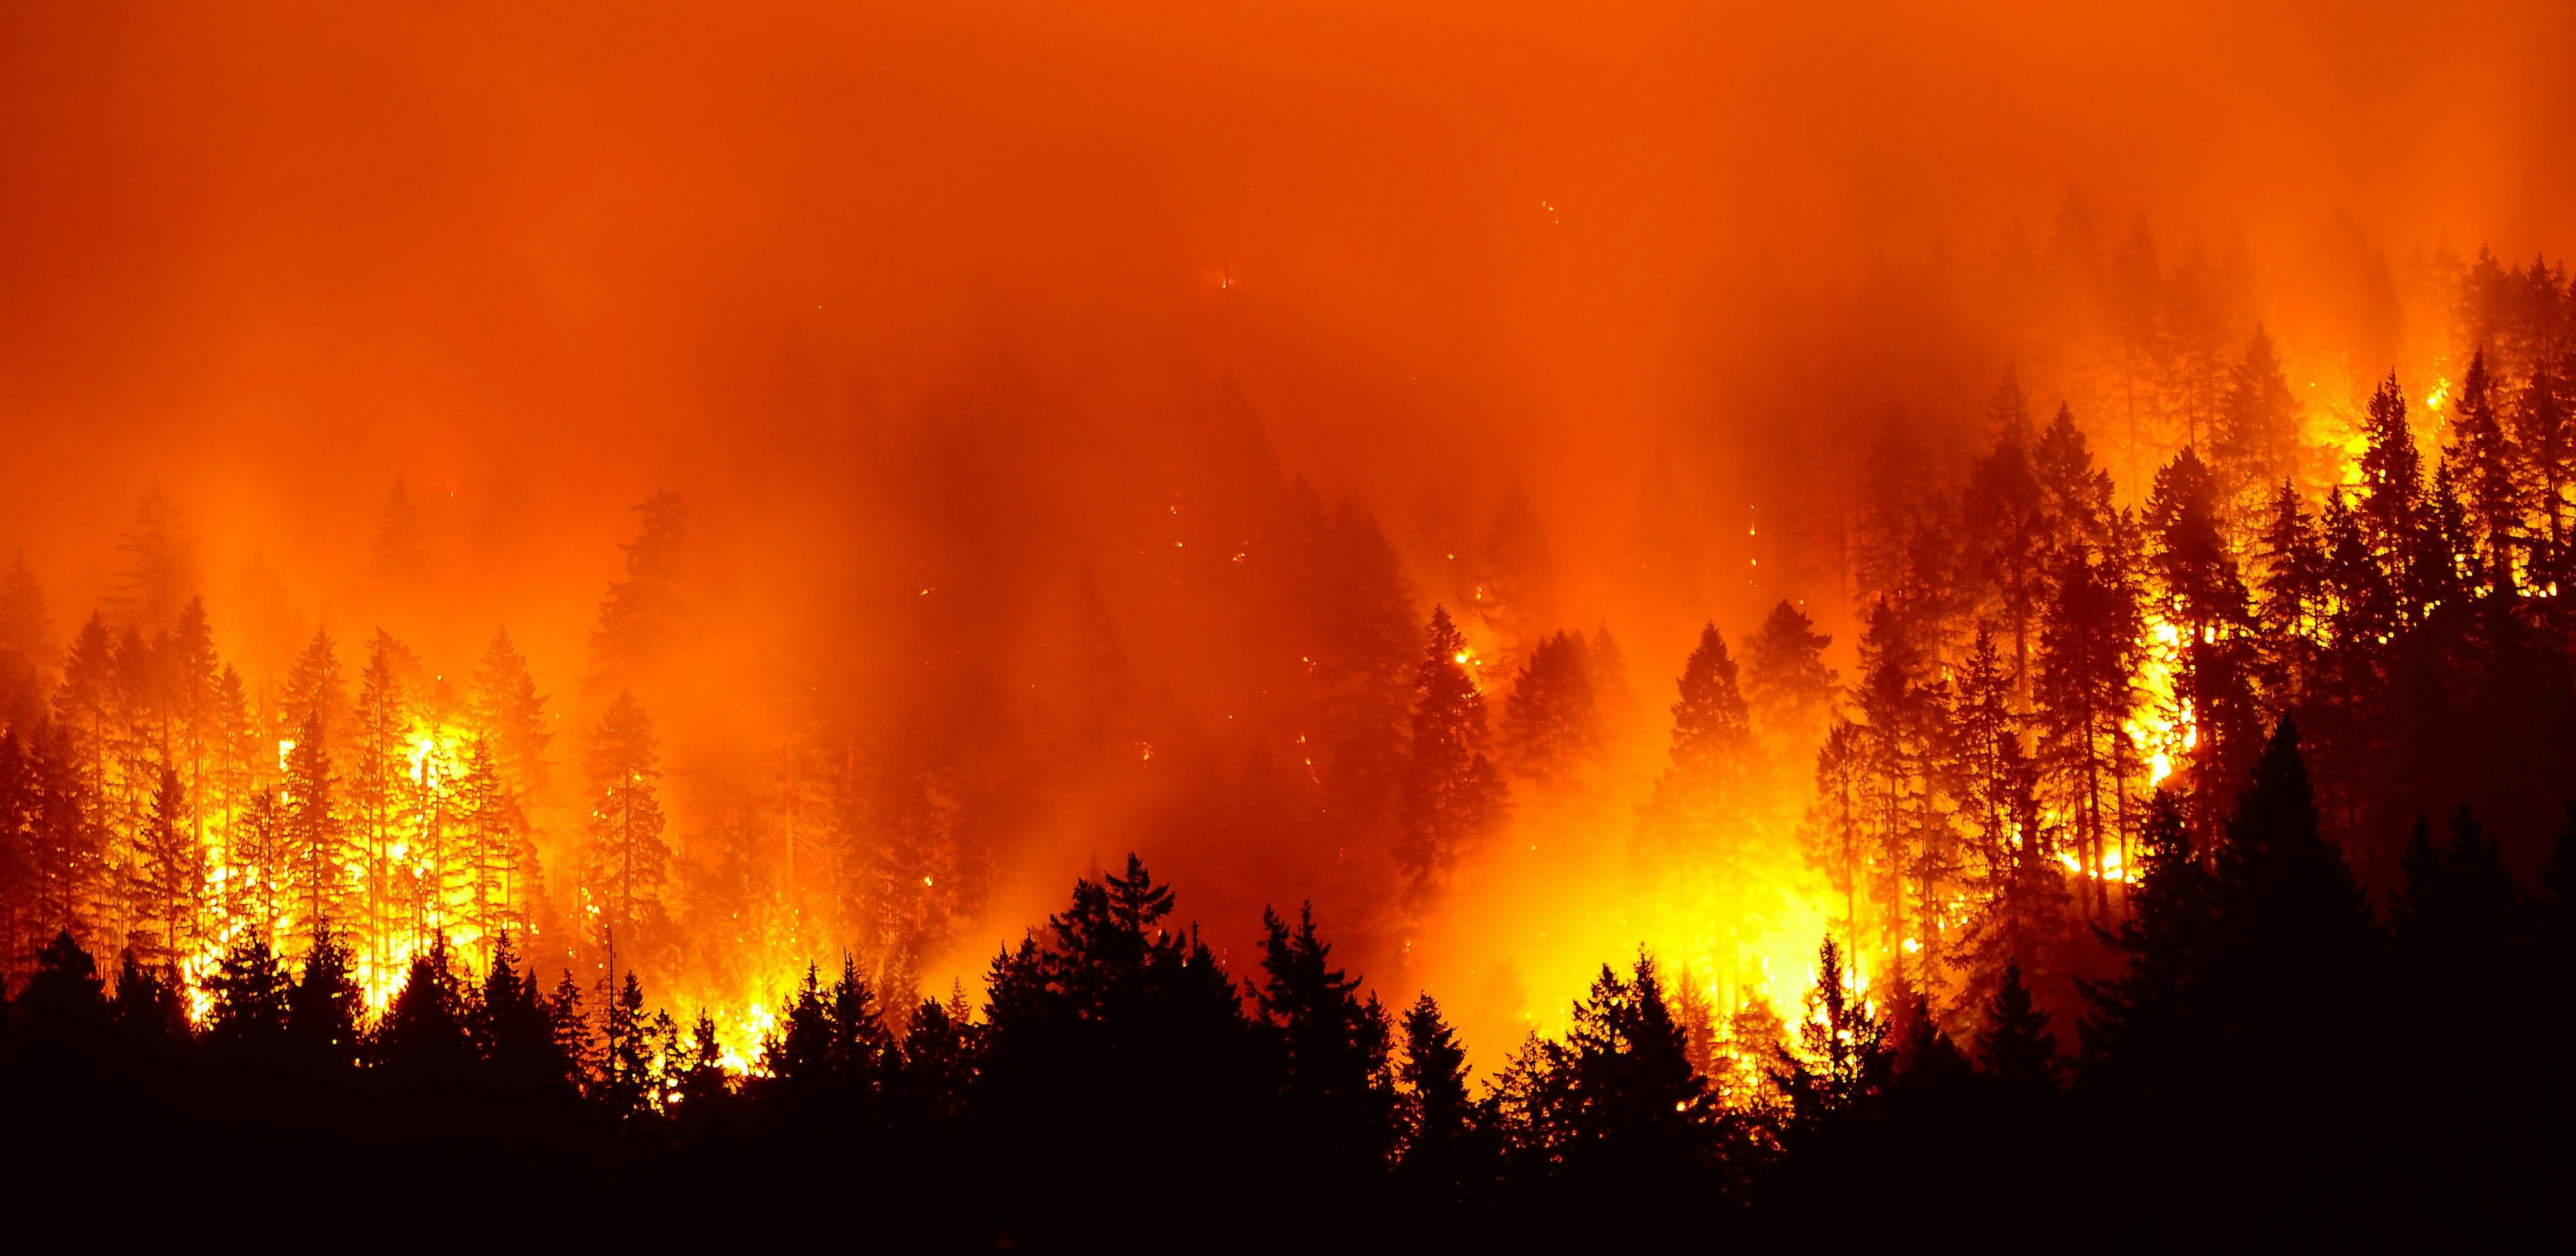 Forest fire | Image Credit: © Kirk Atkinson - stock.adobe.com